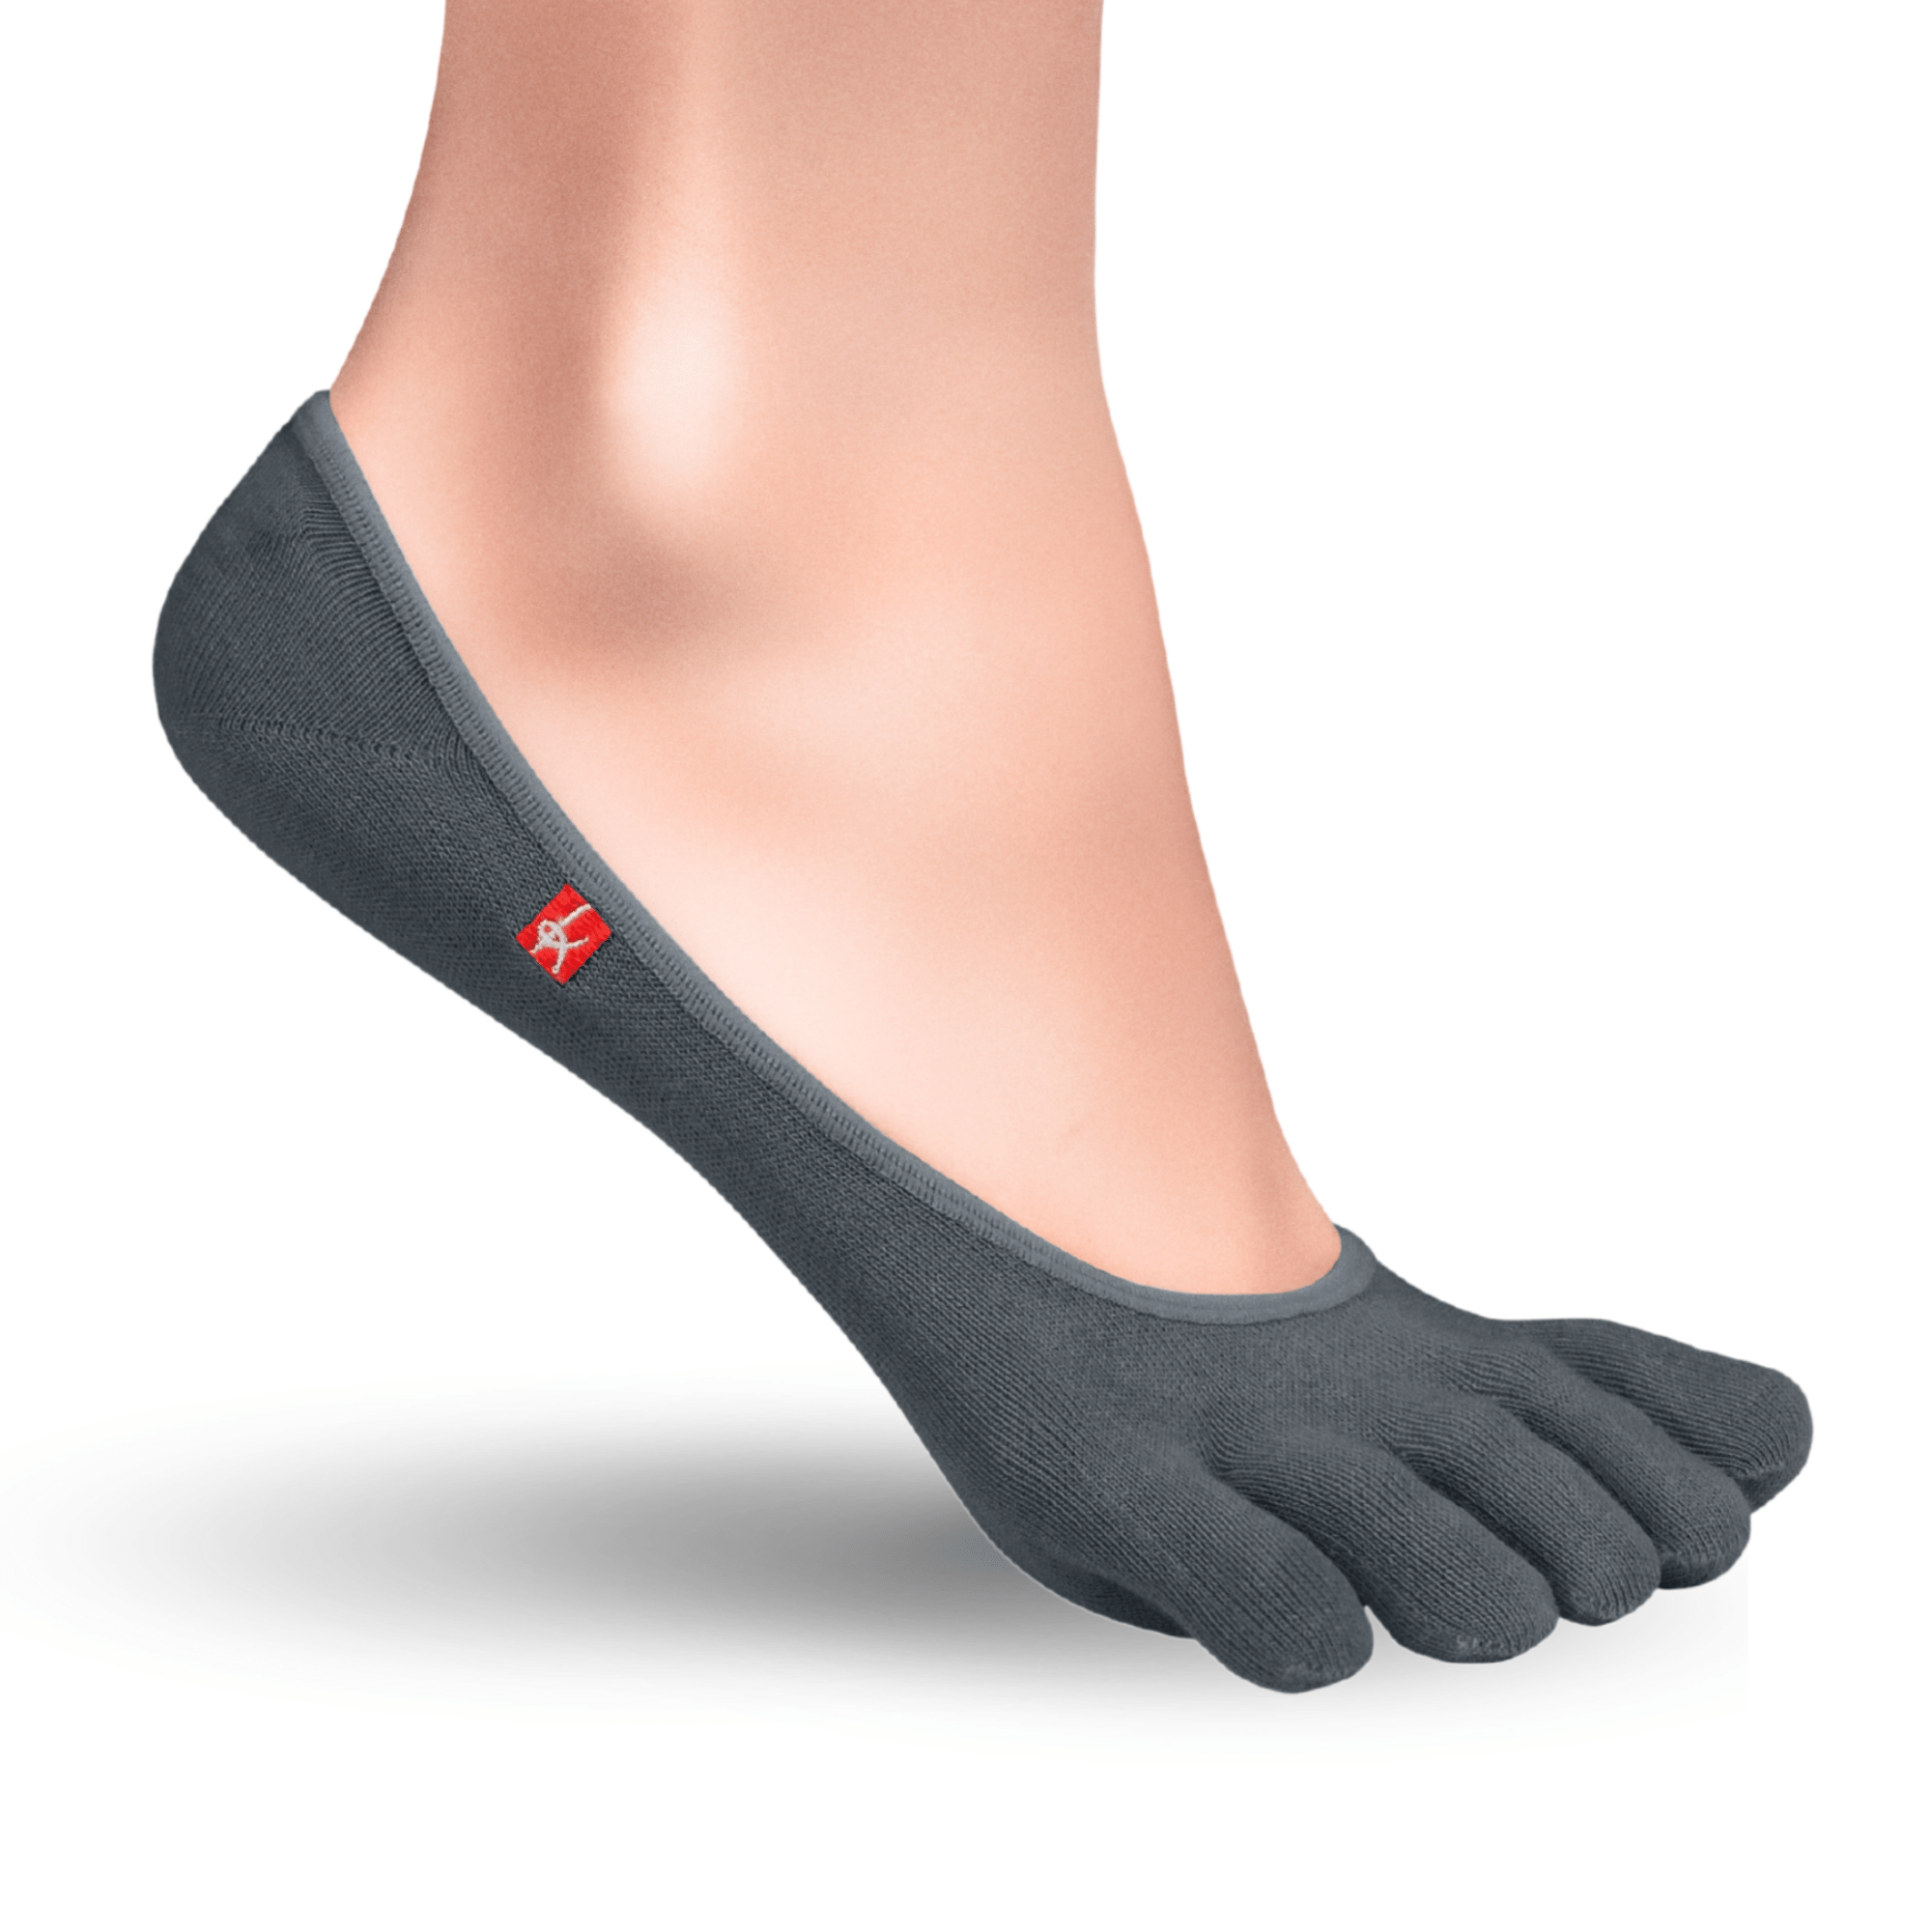 Knitido Zero Coolmax nogavice za noge v sivi barvi